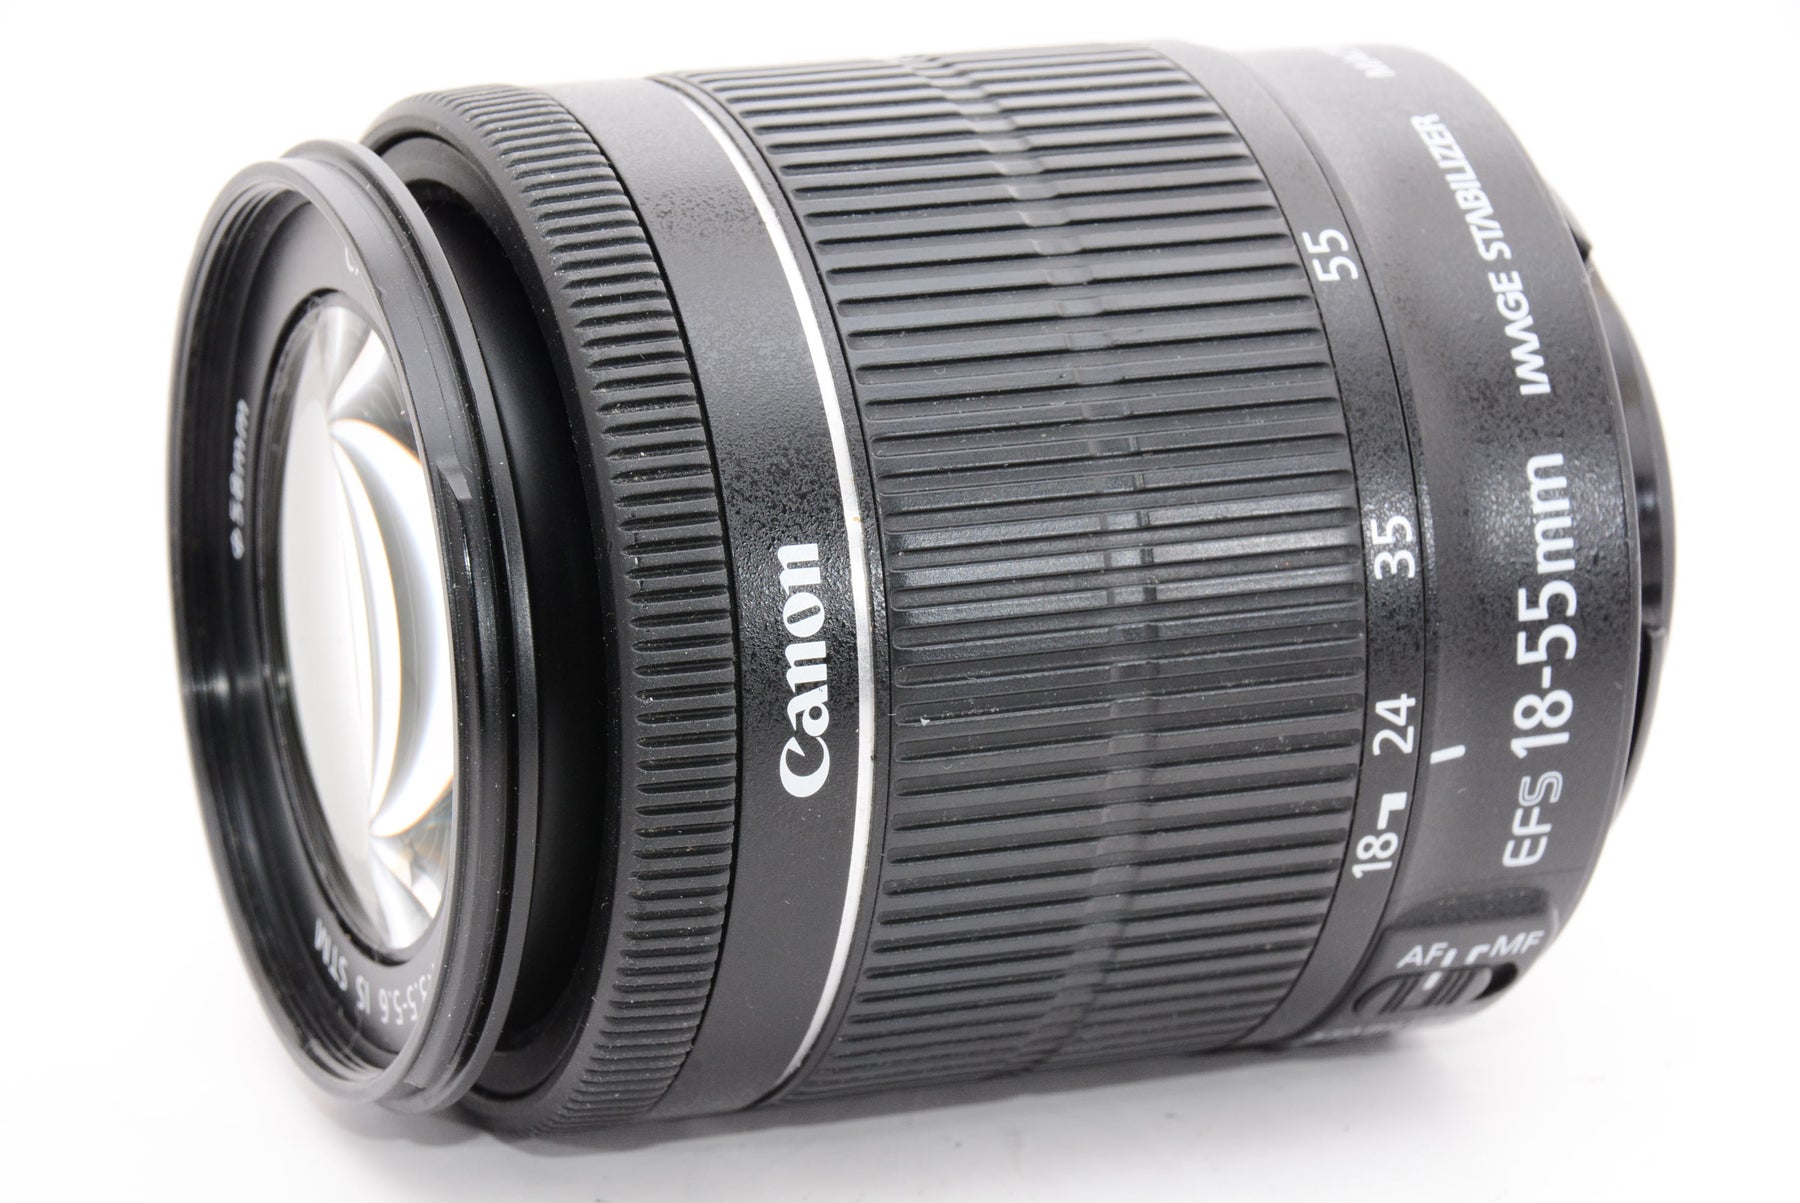 Canon デジタル一眼レフカメラ EOS Kiss X7i レンズキット EF-S18-55mm F3.5-5.6 IS STM付属 KISSX7I - 2